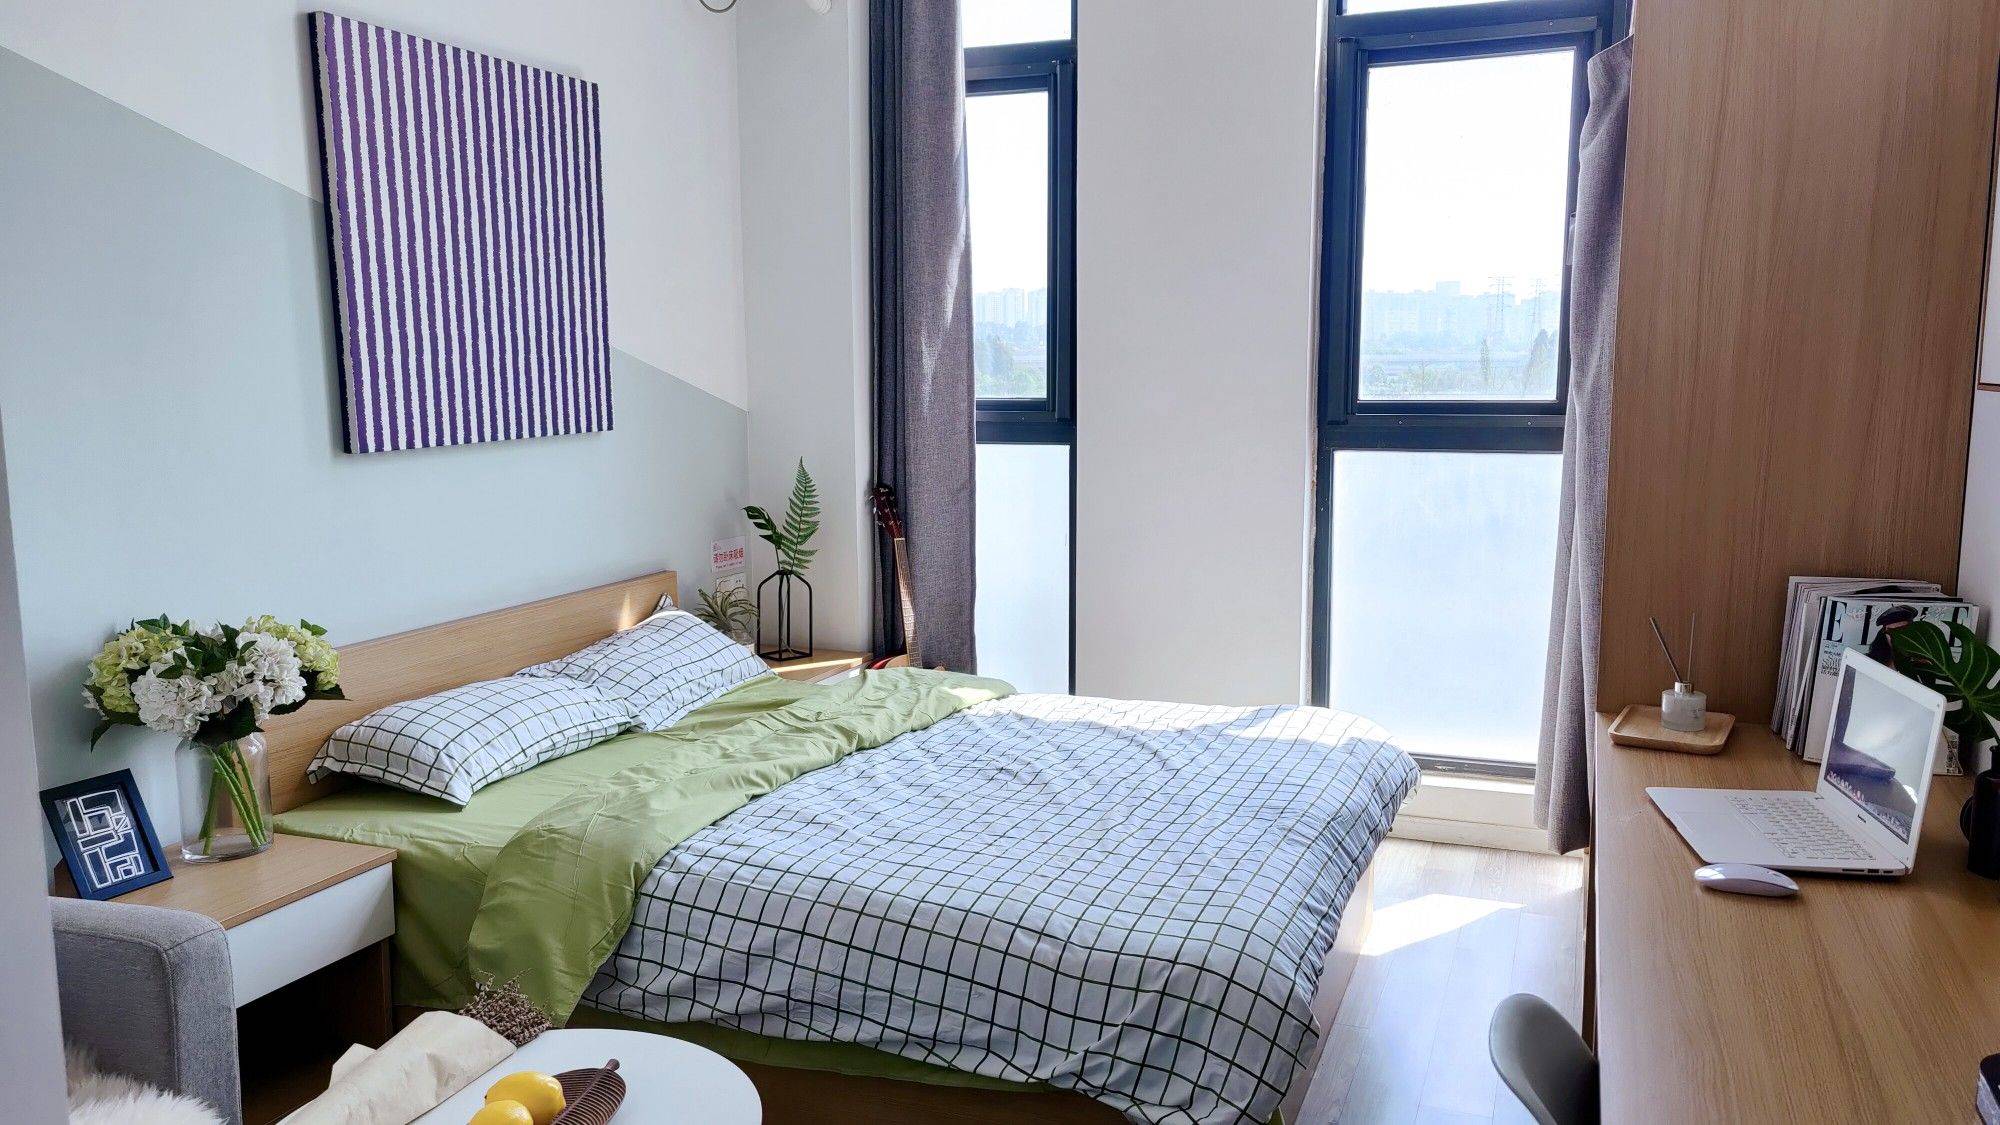 Chengdu-JinJiang-Cozy Home,Clean&Comfy,No Gender Limit,Chilled,LGBTQ Friendly